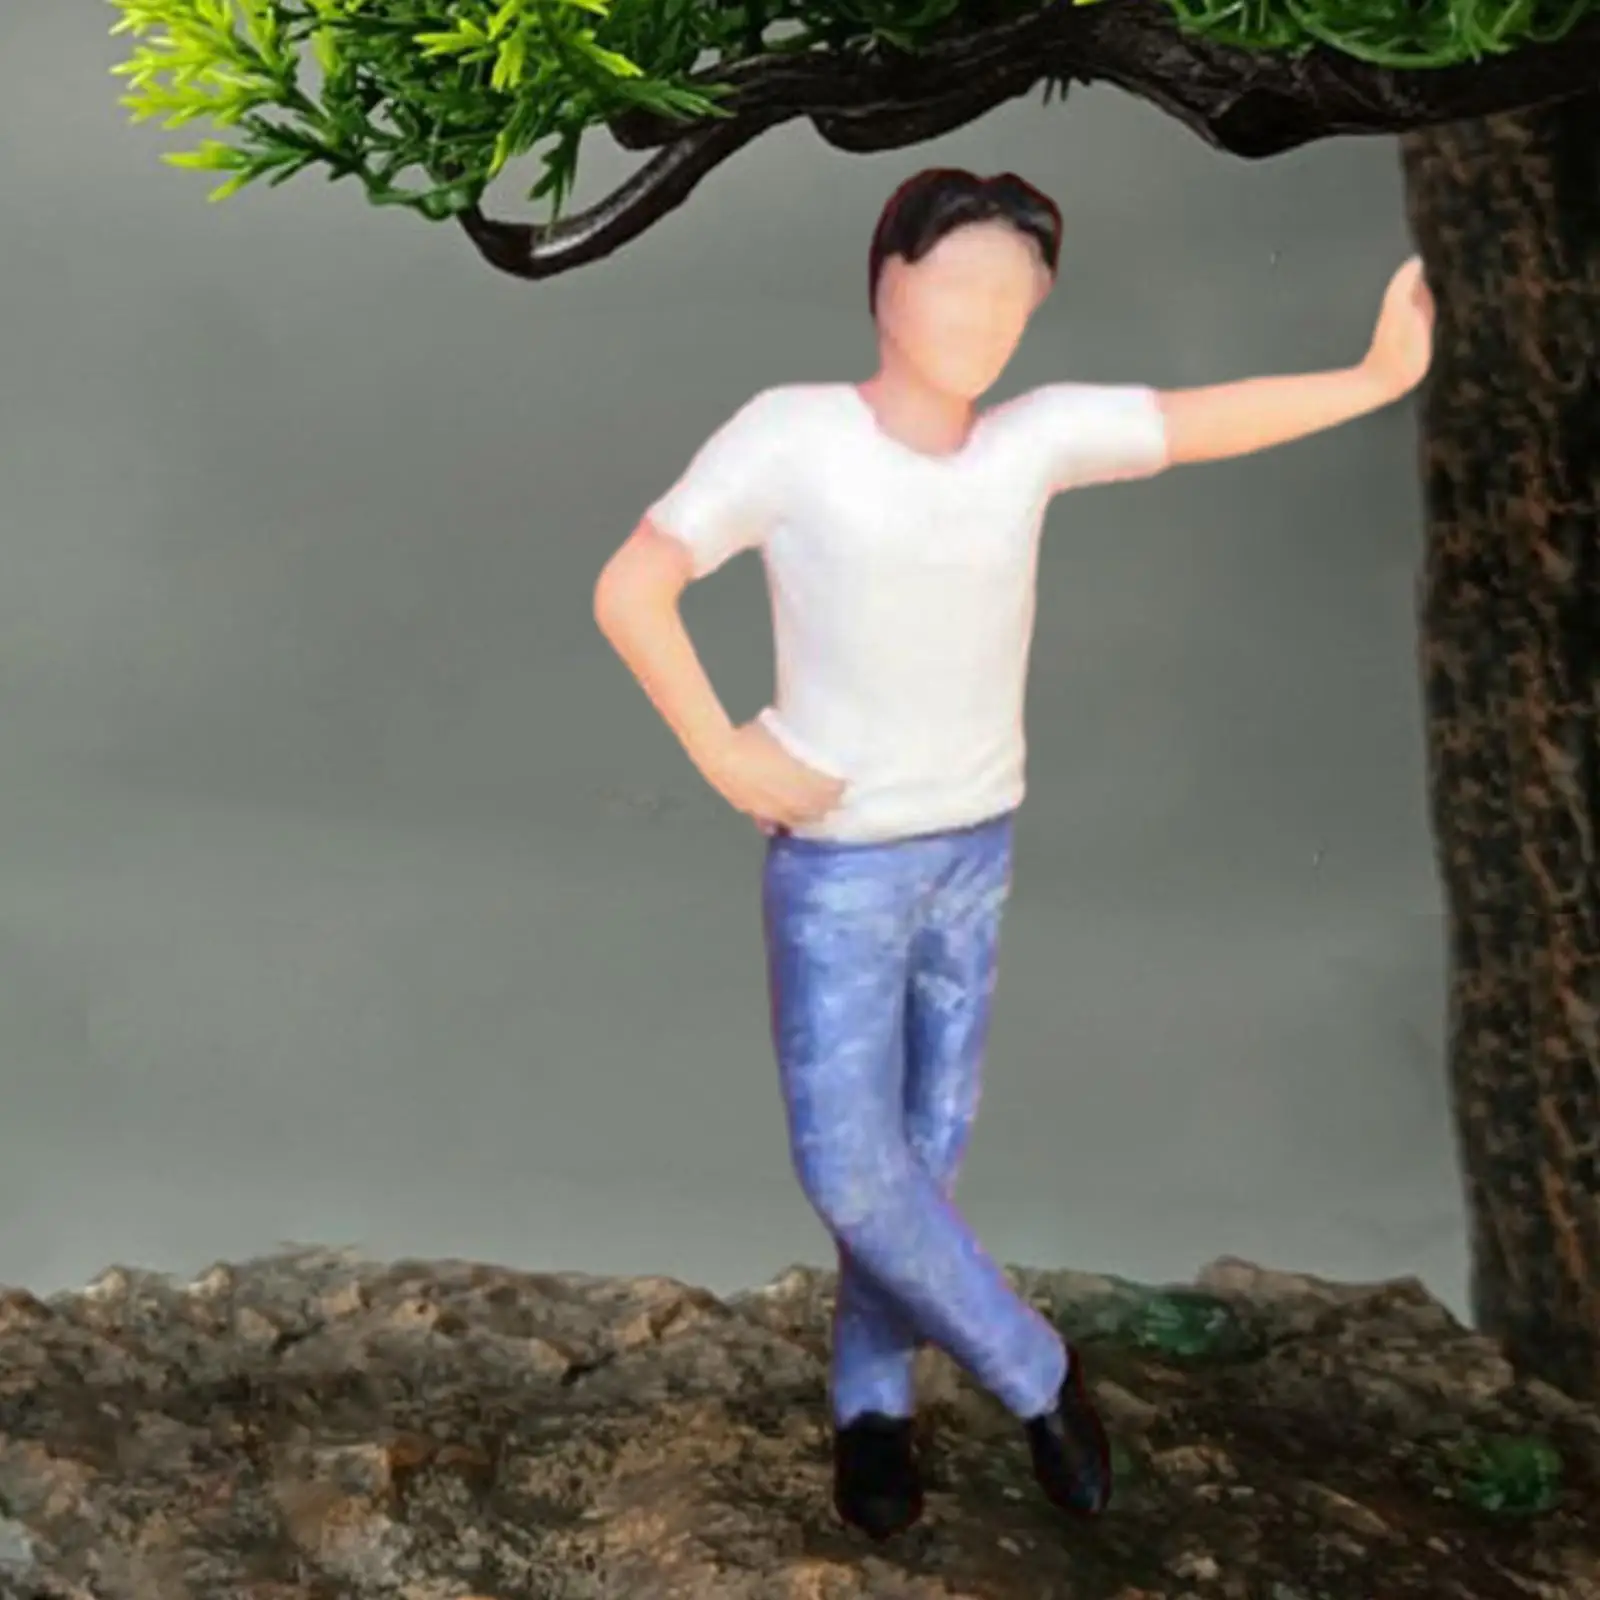 1/64 People Figurines Realistic for Micro Landscape Fairy Garden Model Train